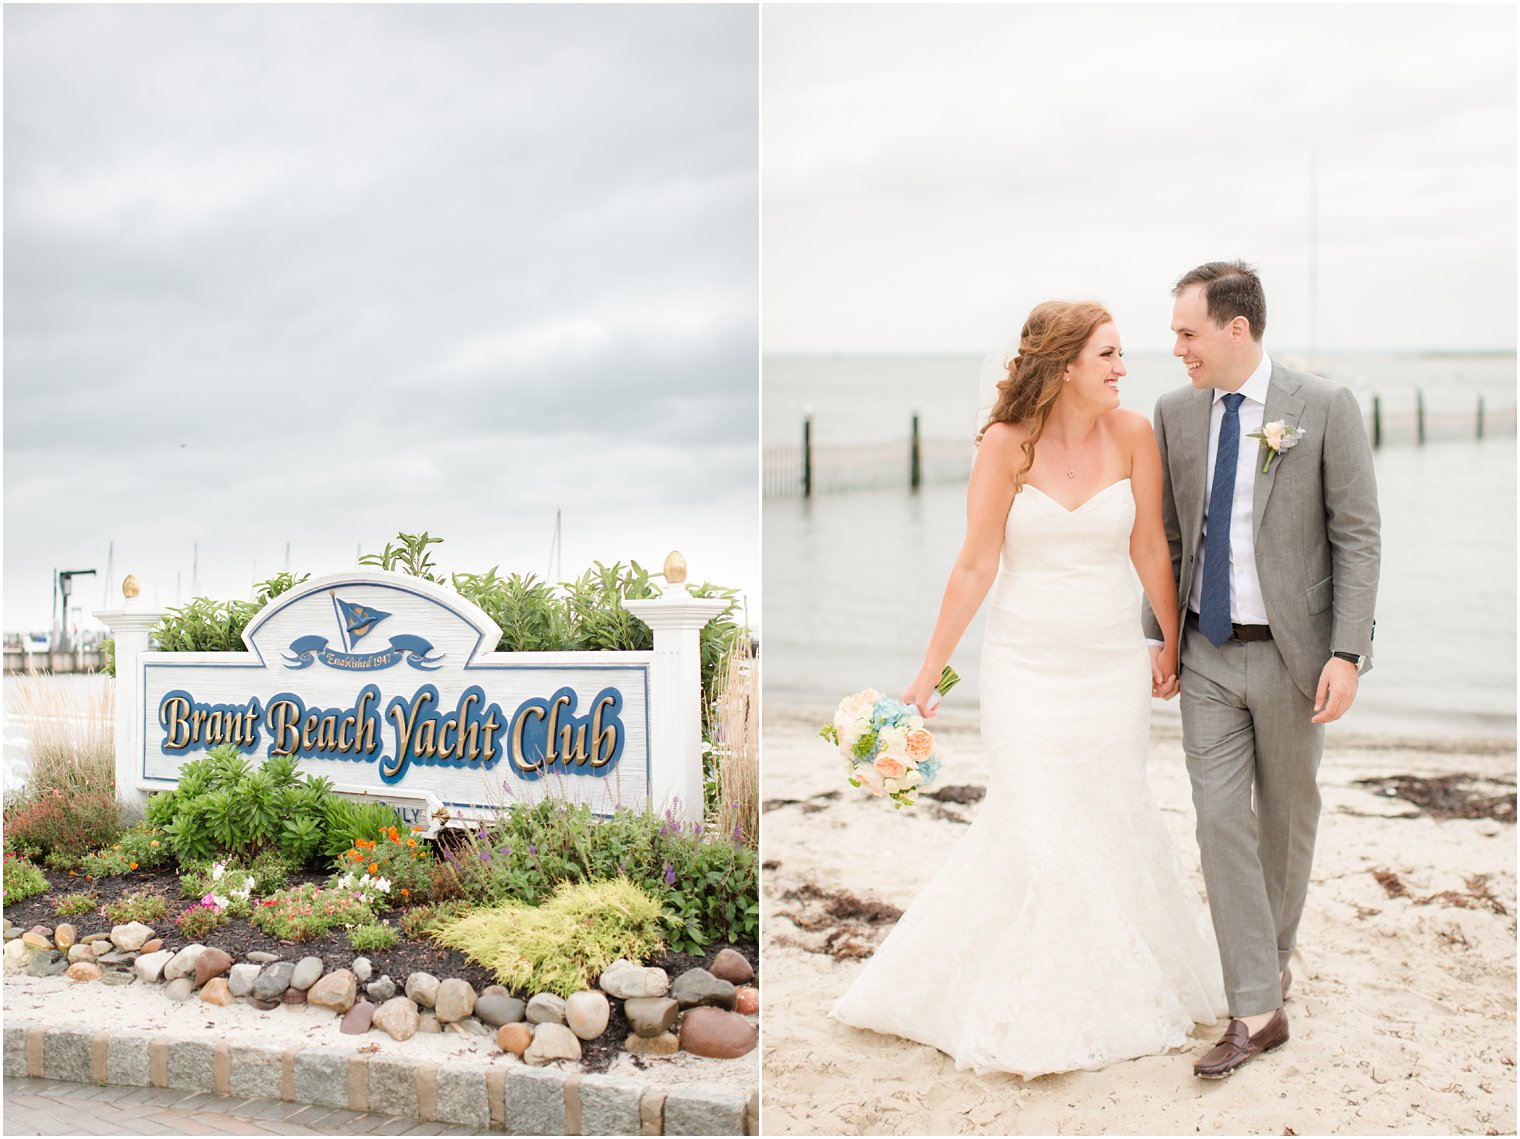 Brant Beach Yacht Club wedding day beach portraits by Idalia Photography